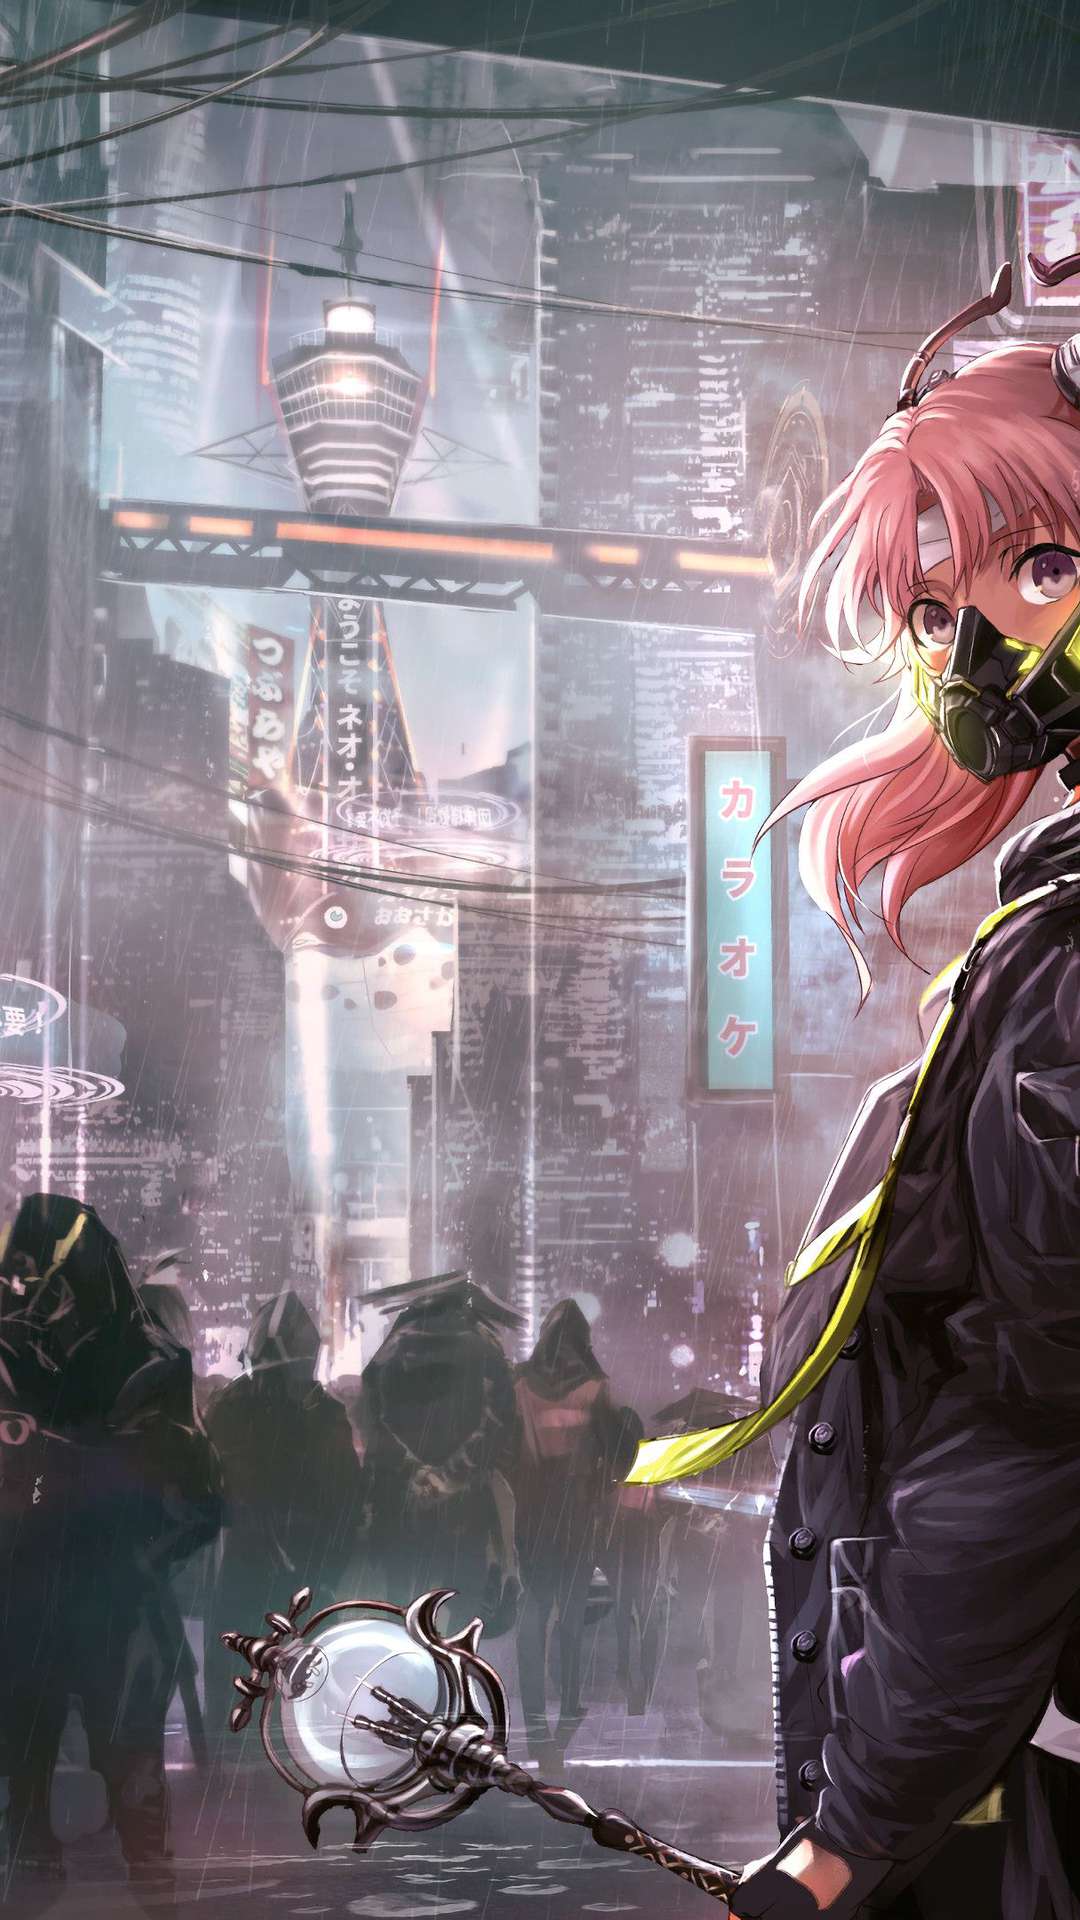 36+] Cyberpunk Anime Wallpapers - WallpaperSafari